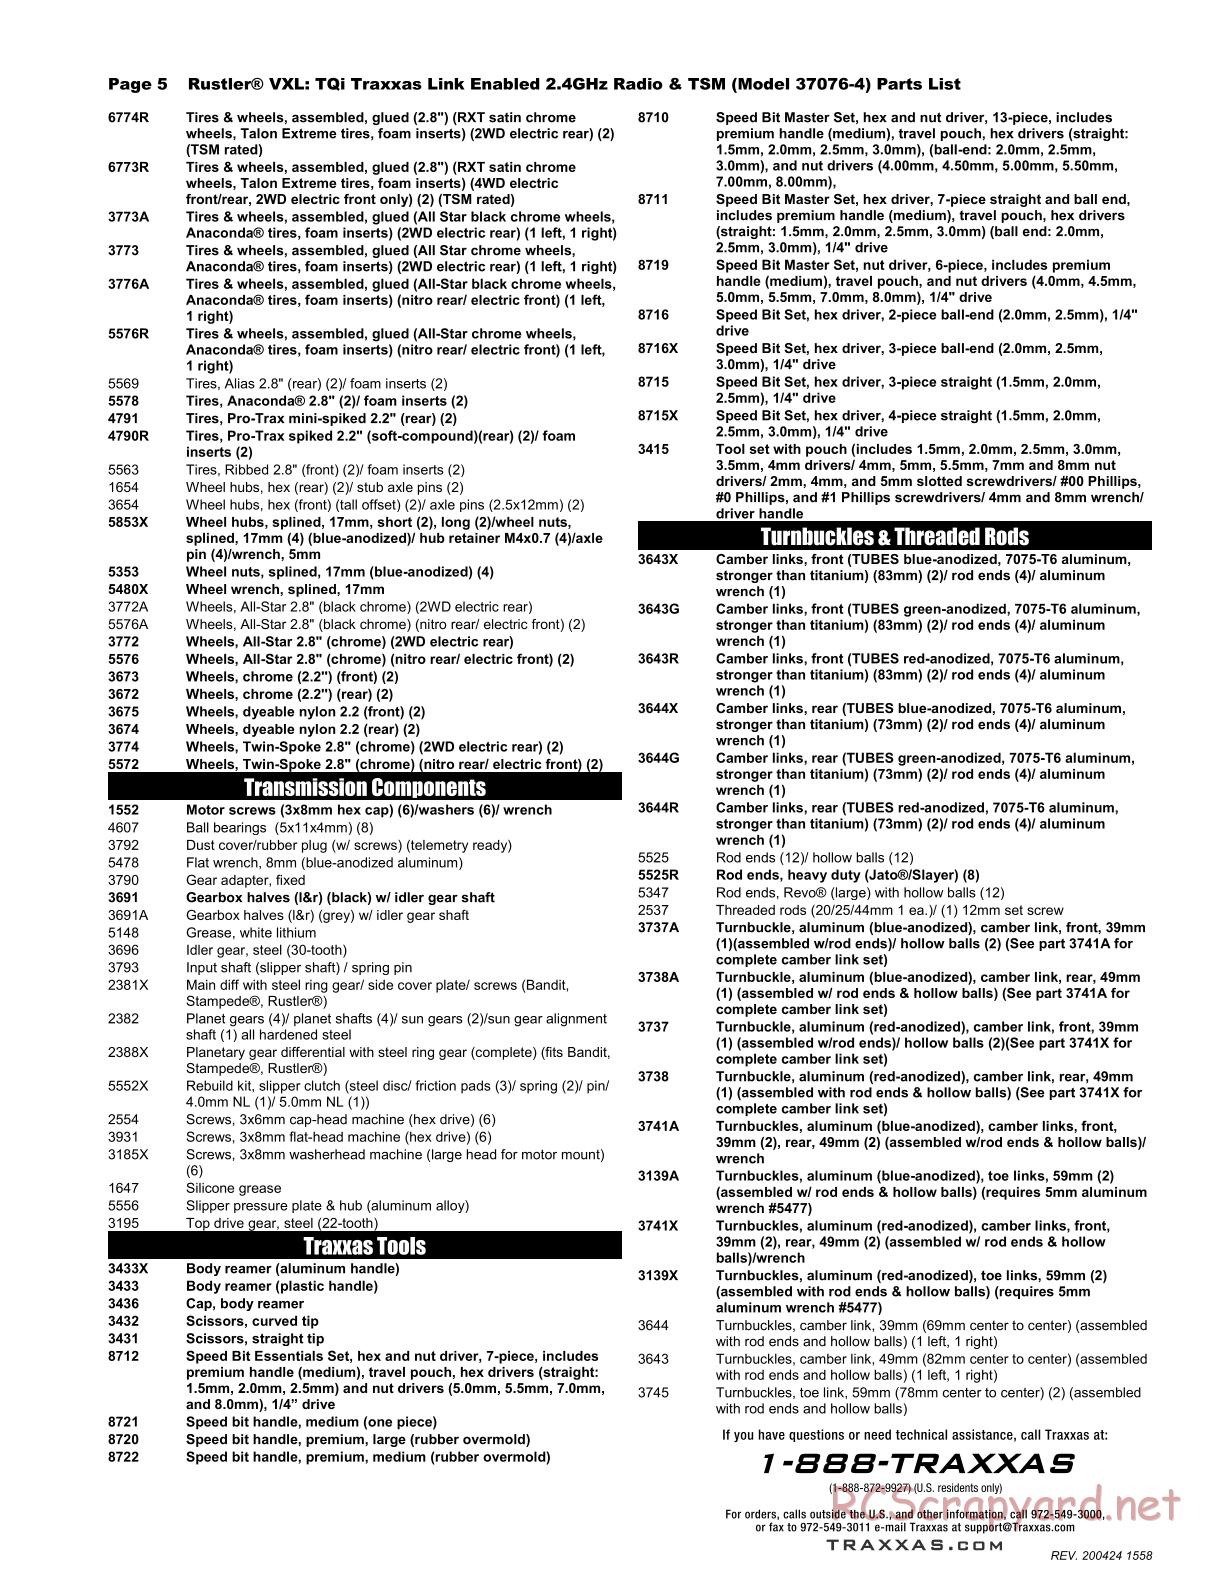 Traxxas - Rustler VXL TSM - Parts List - Page 5